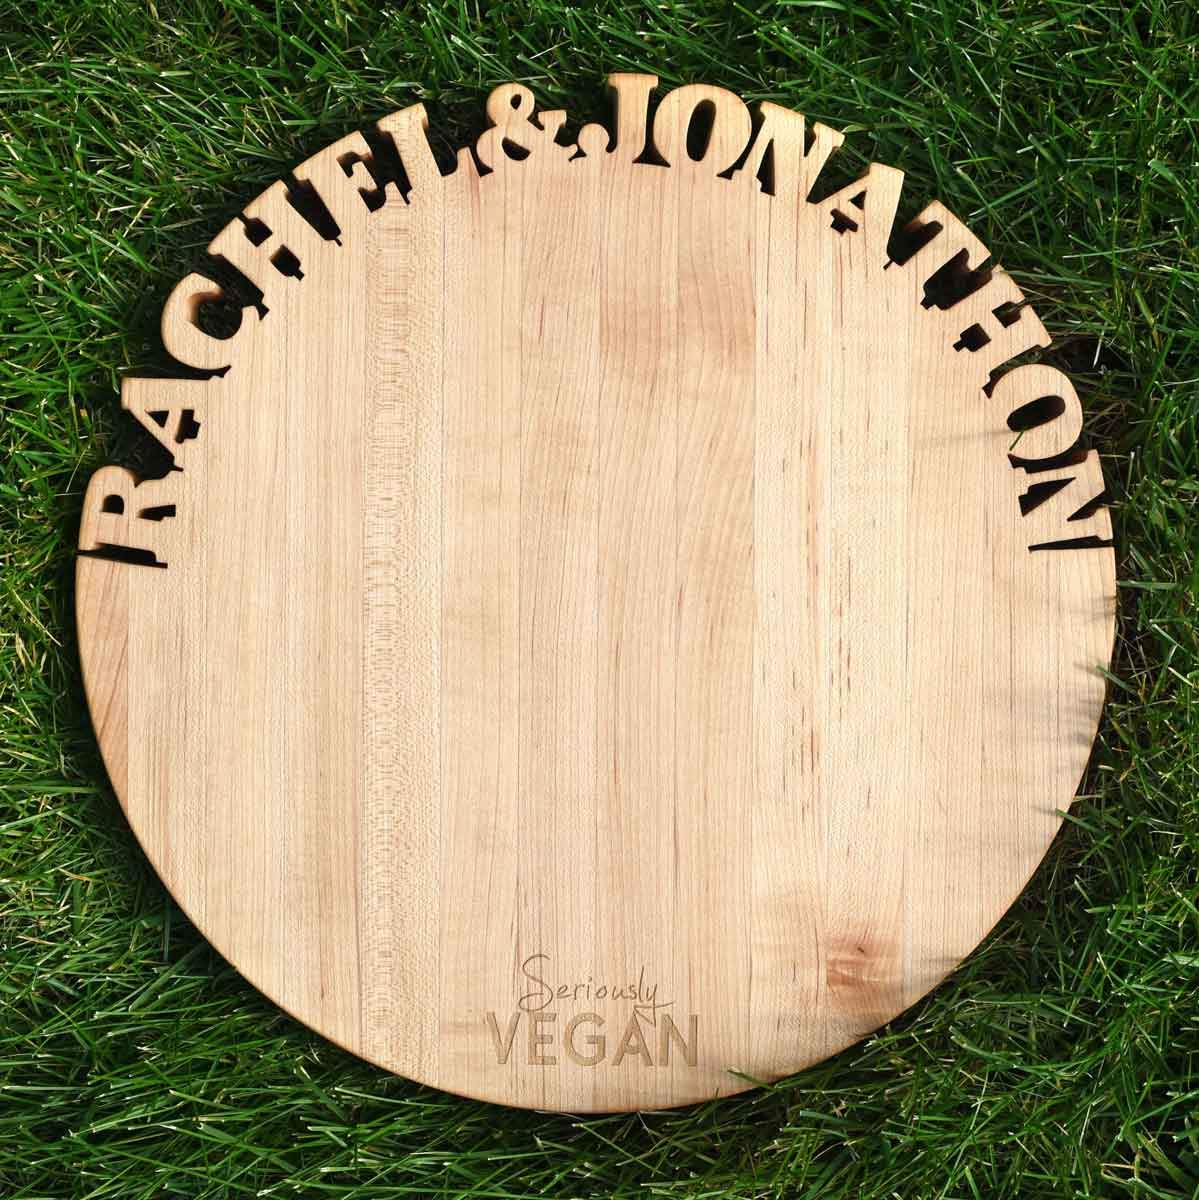 vegan products - custom cutting boards